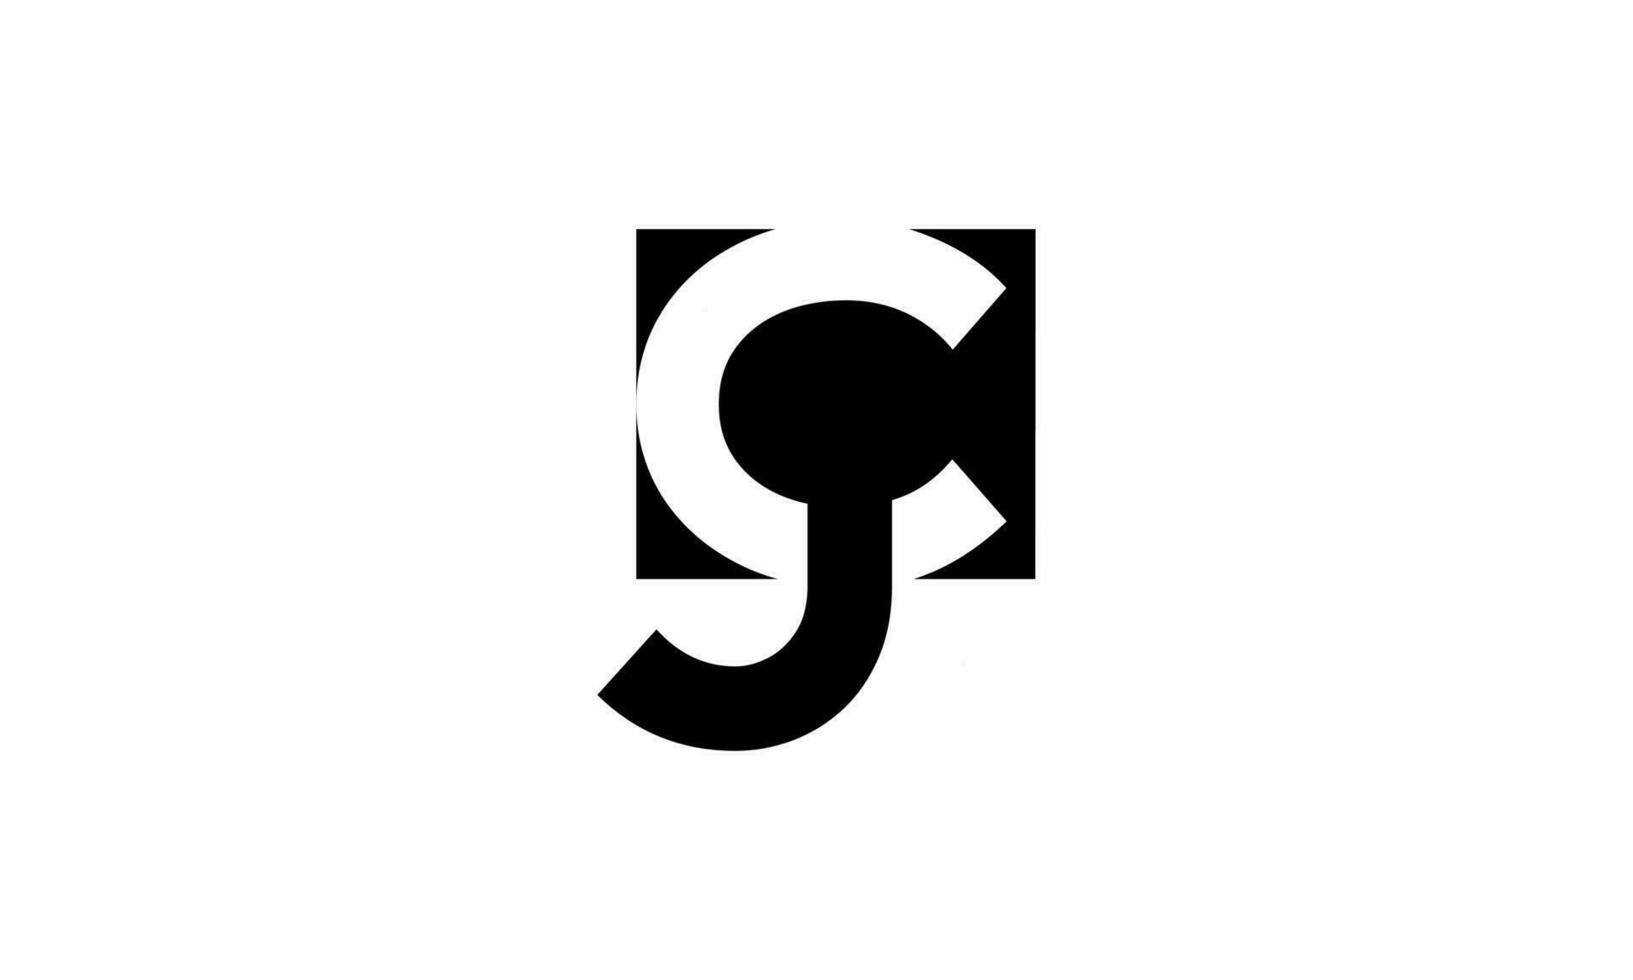 letra cj logo diseño. inicial letra cj logo en pizca antecedentes. gratis vector